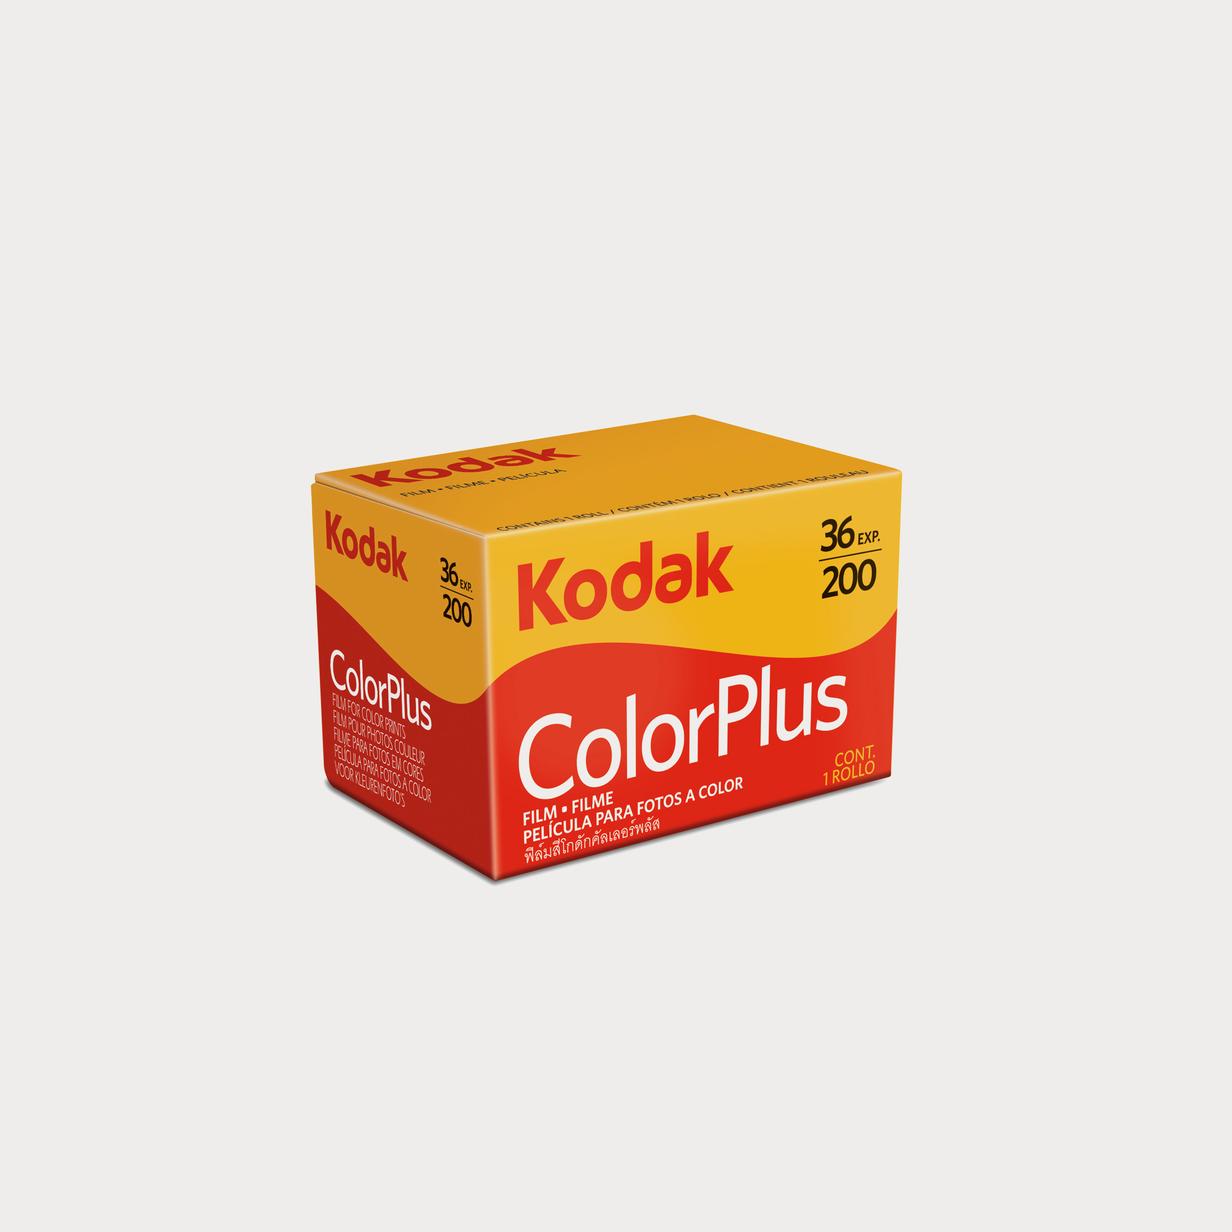 Colorplus 200 kodak Kodak ColorPlus